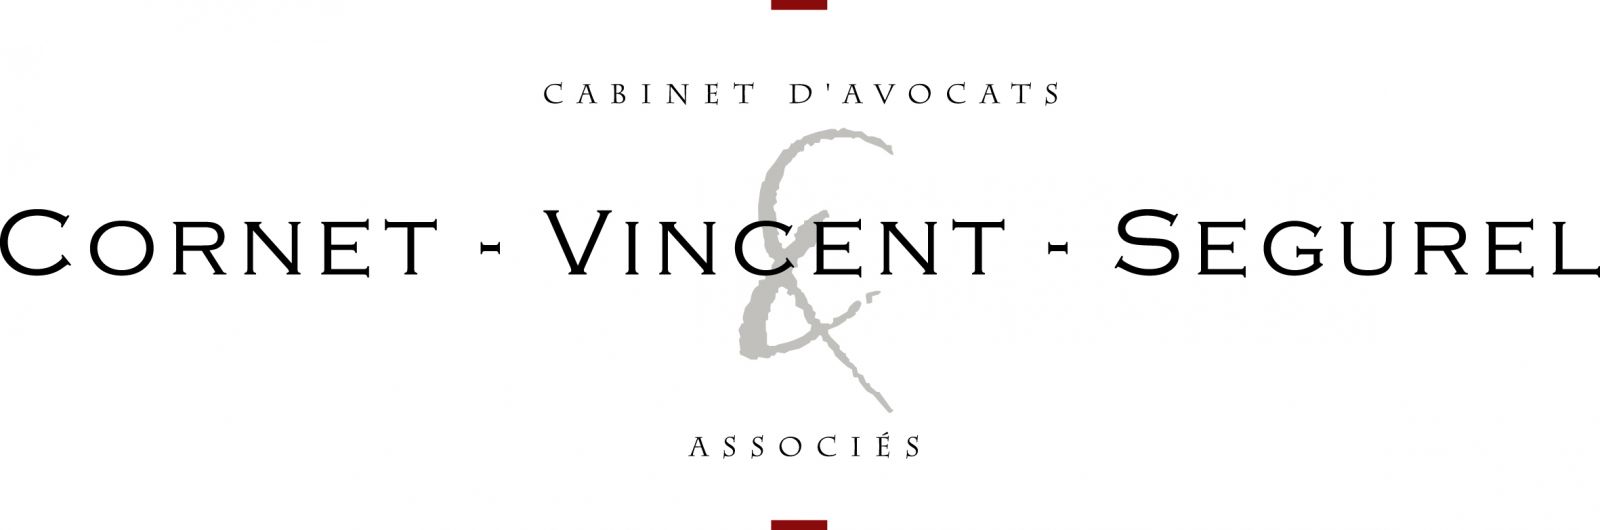 Cabinet D'Avocats